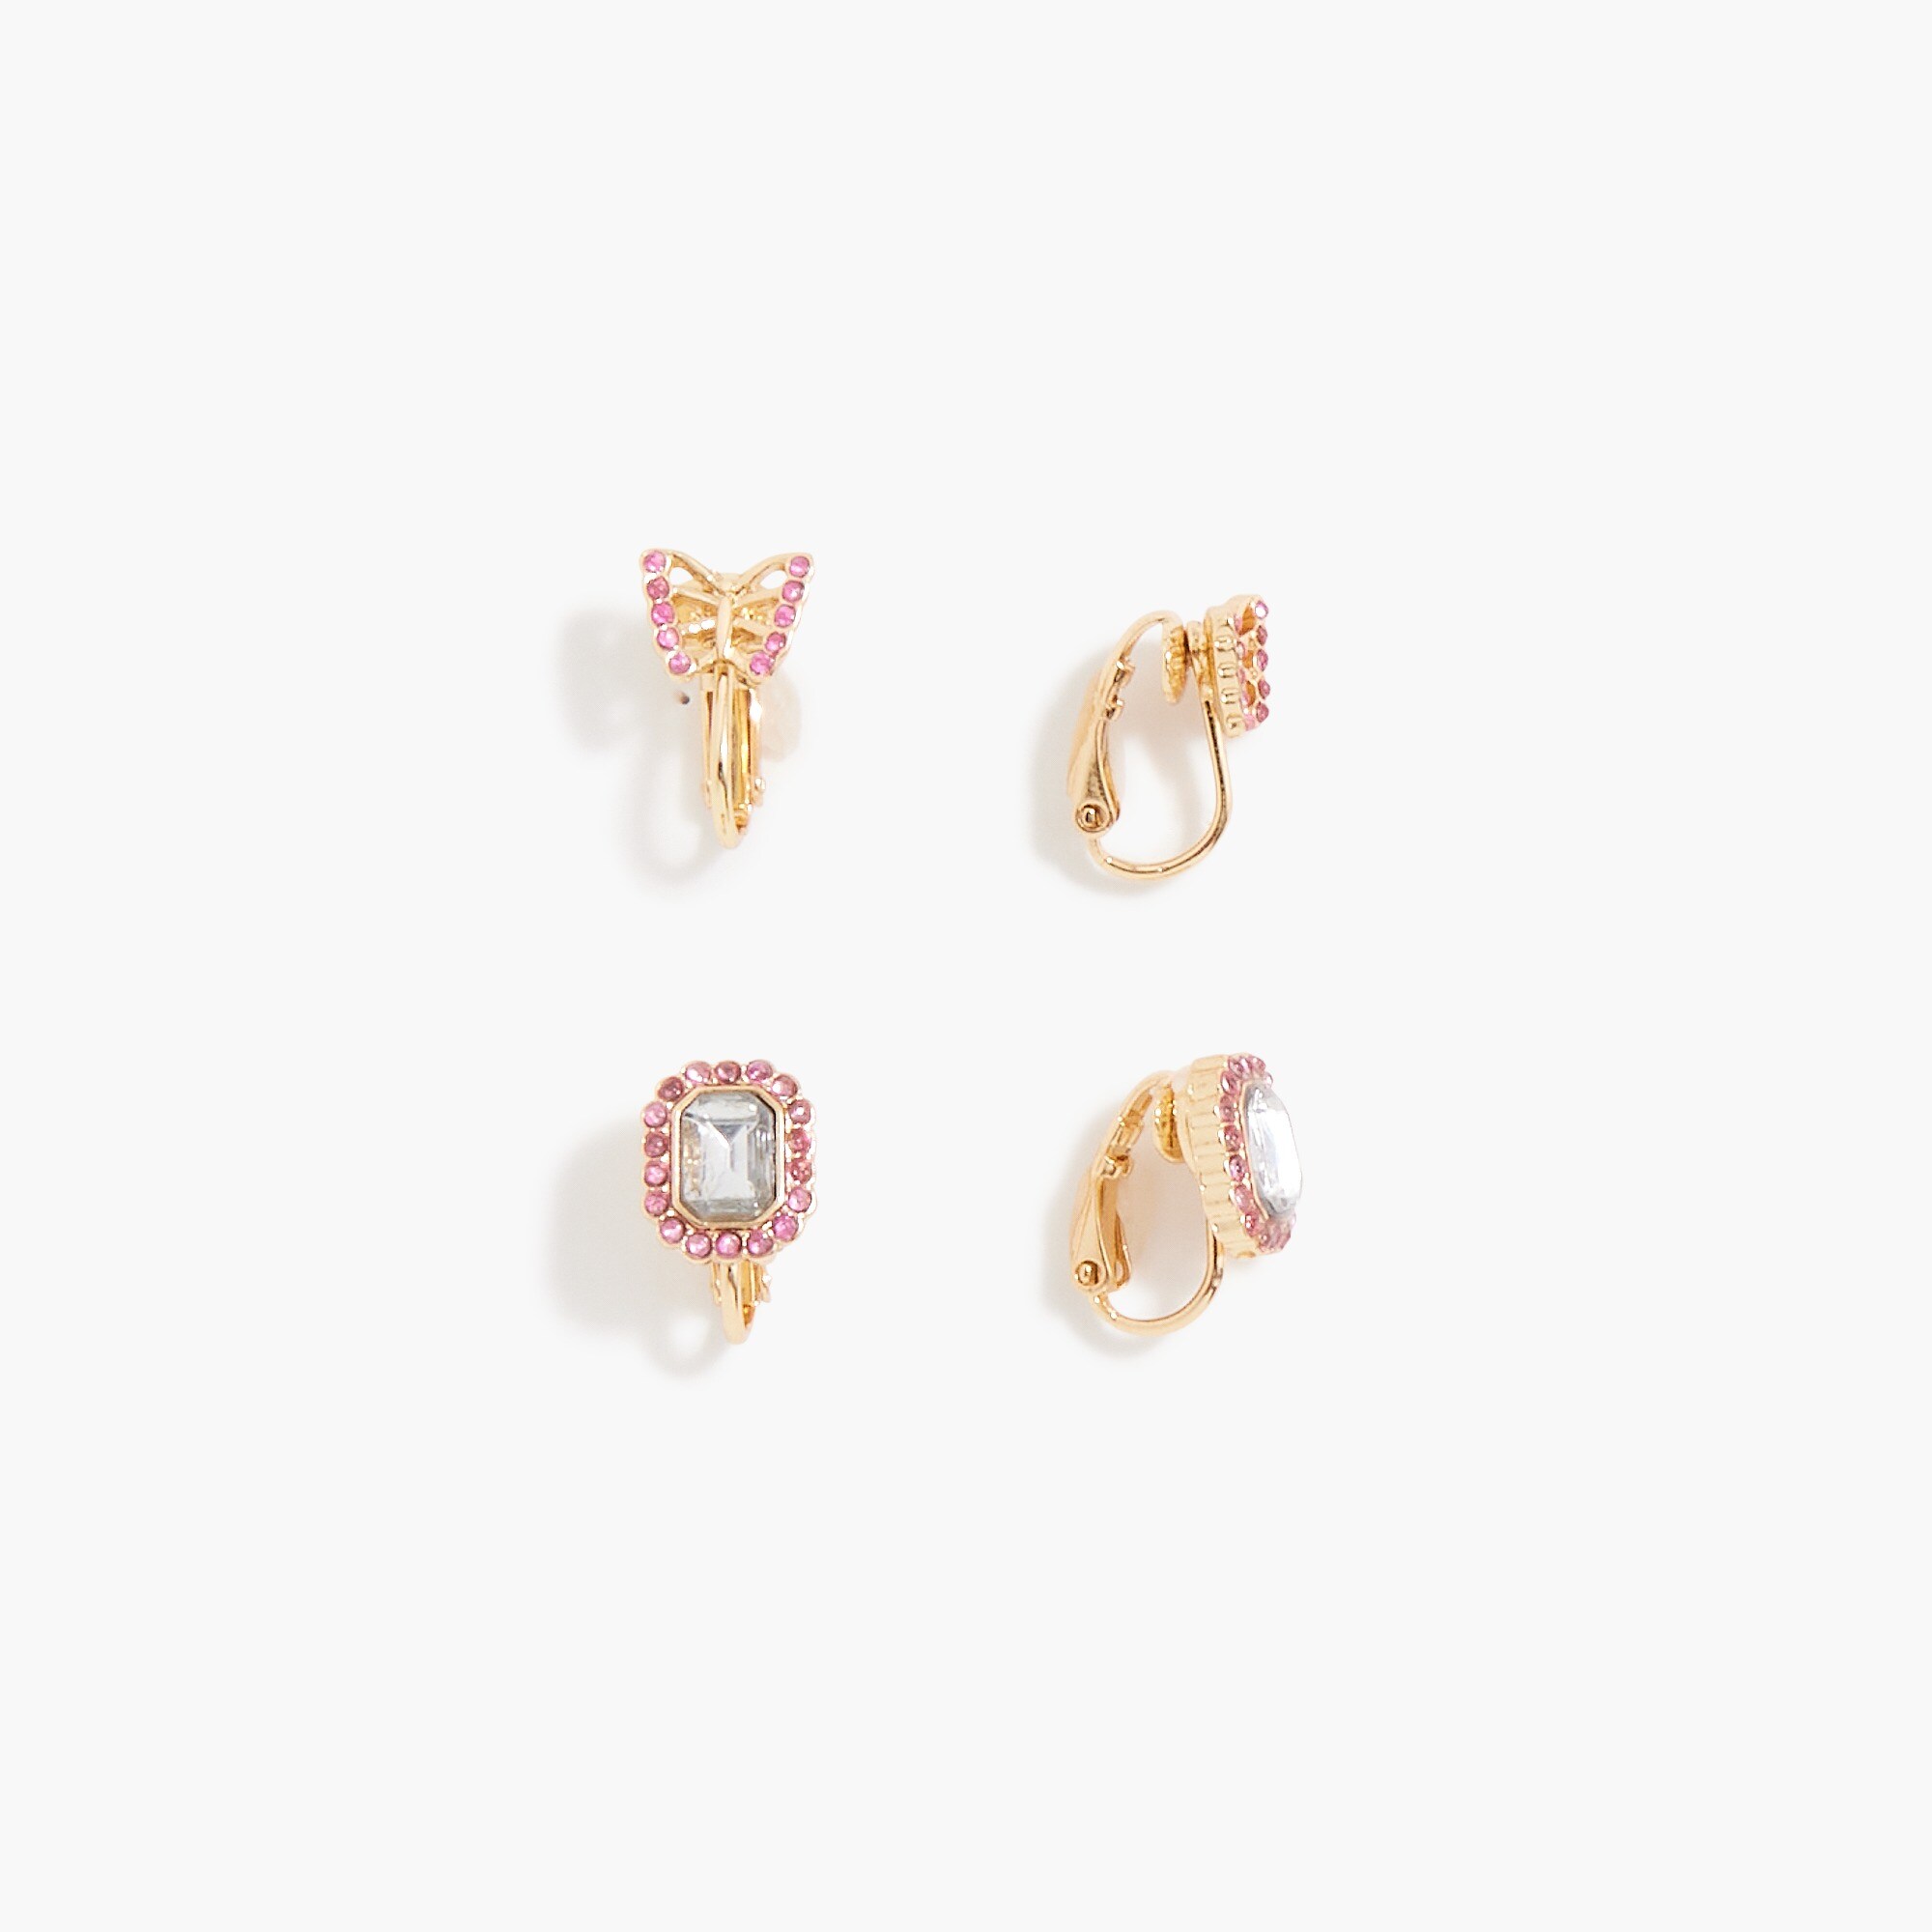  Girls' rhinestone clip-on earrings set-of-two